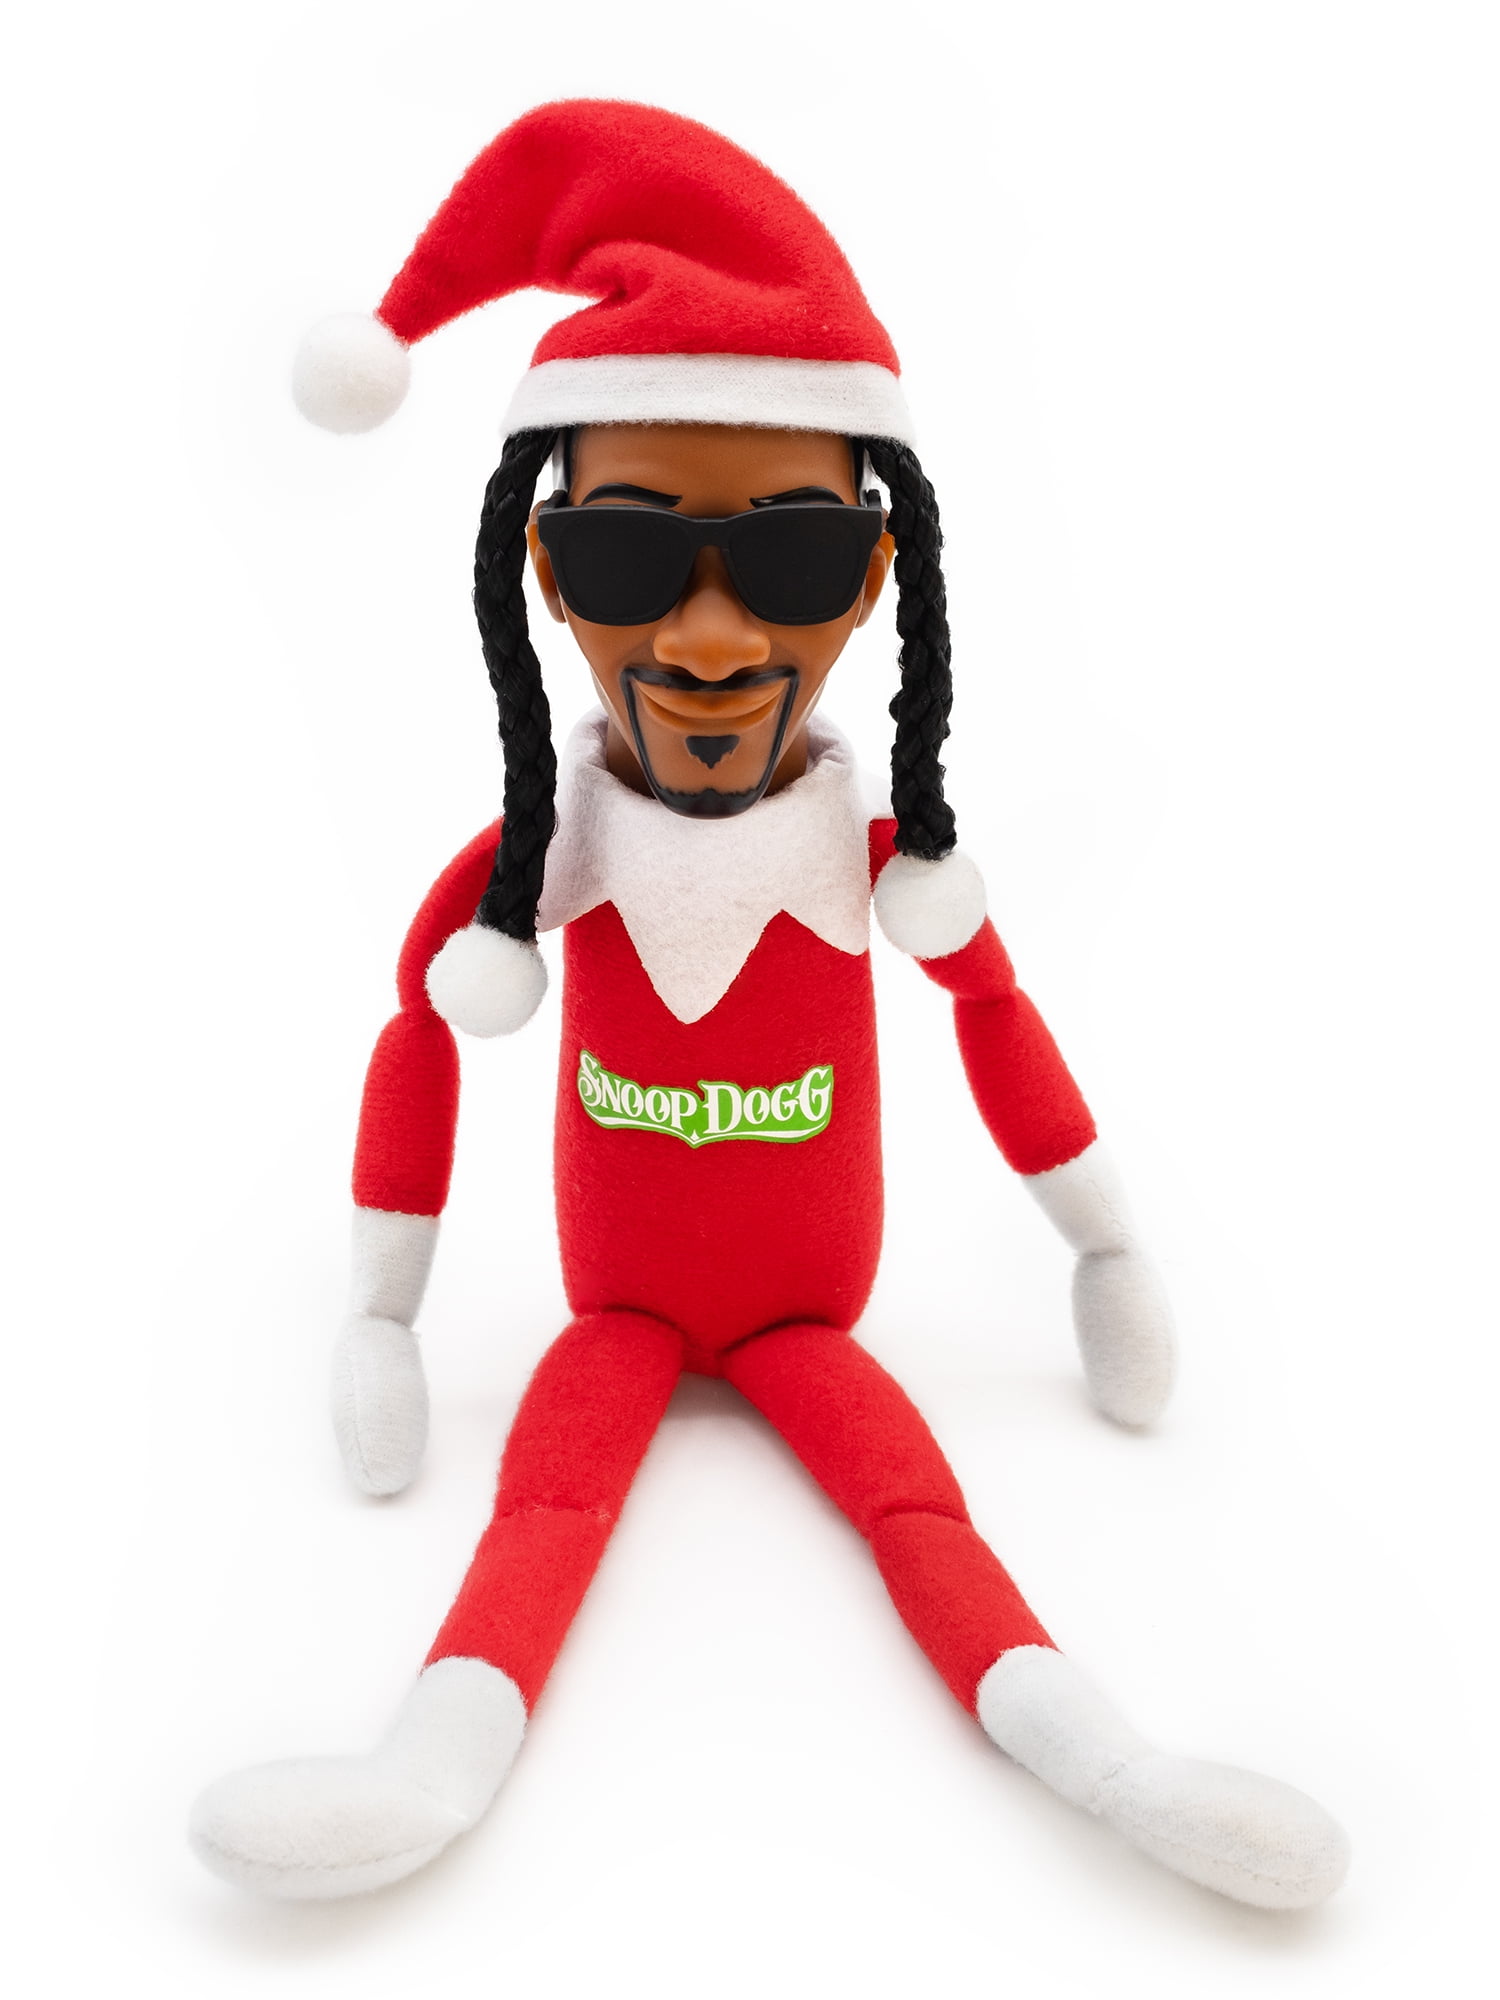 Snoop on the Stoop 12” Snoop Dogg Christmas Red Plush Figurine 